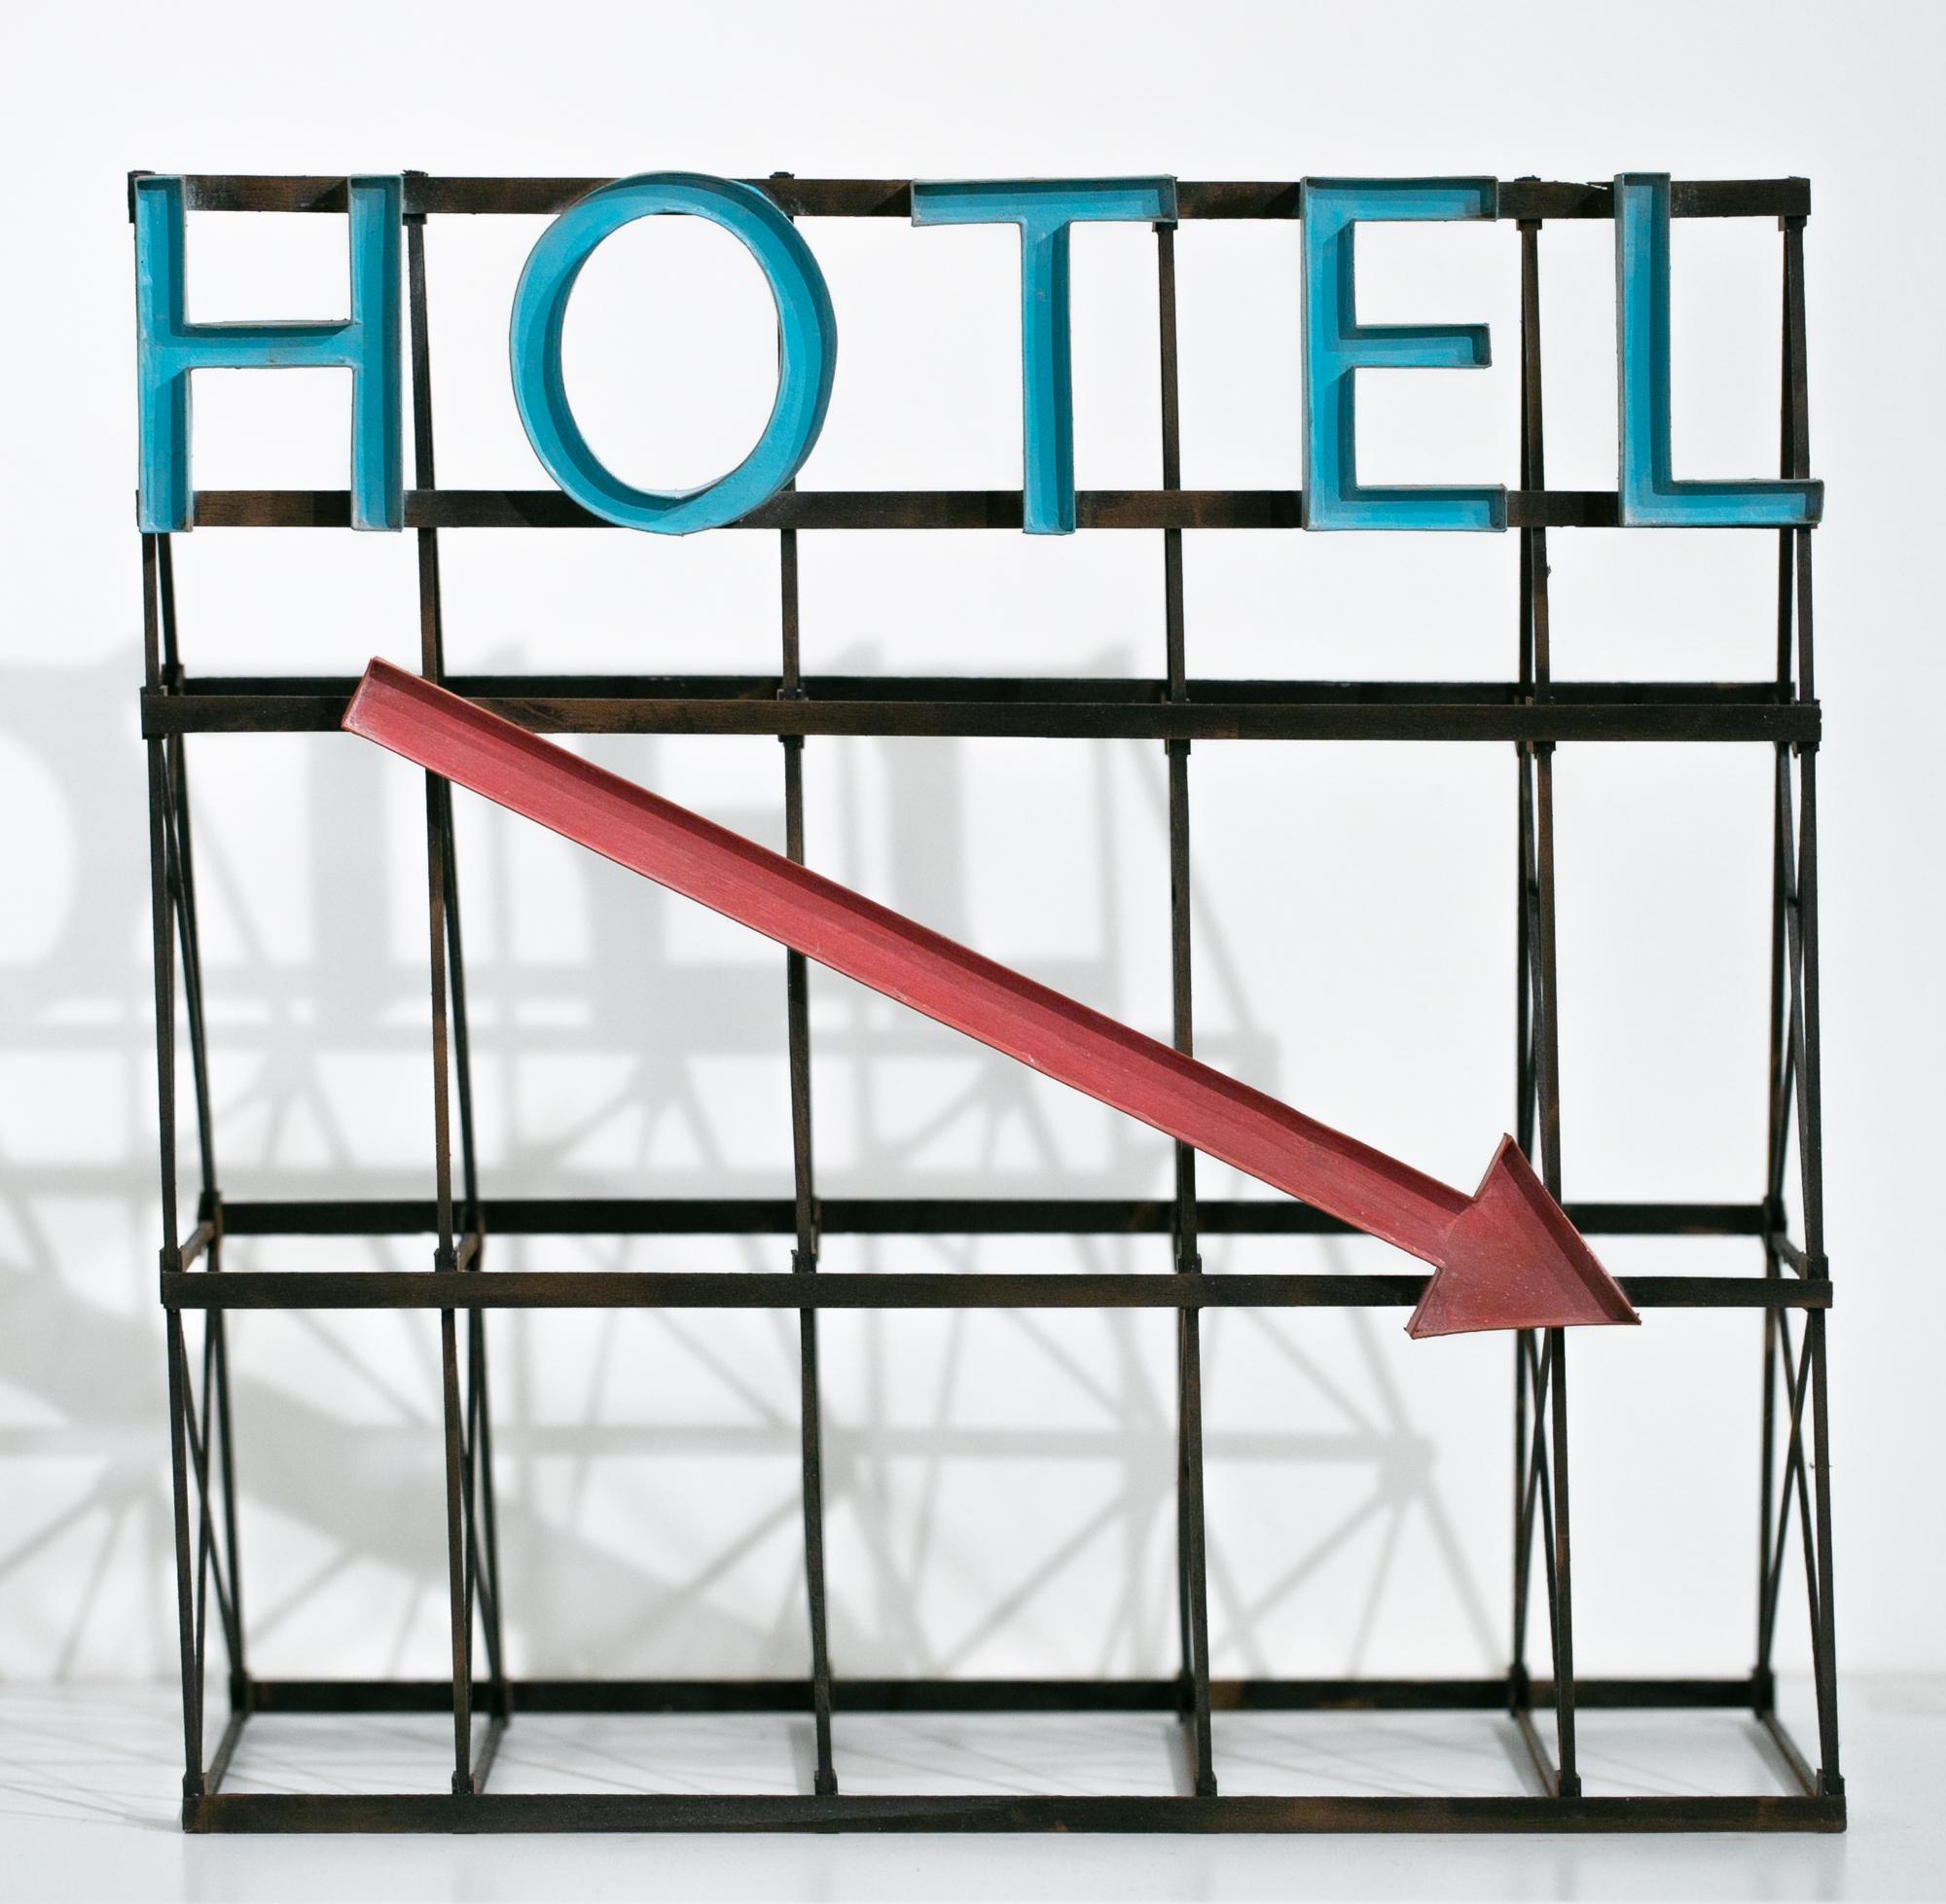 Drew Leshko Figurative Sculpture - "Hotel (Blue/Red)", Miniature, Architecture, Sign, Cityscape, Sculpture